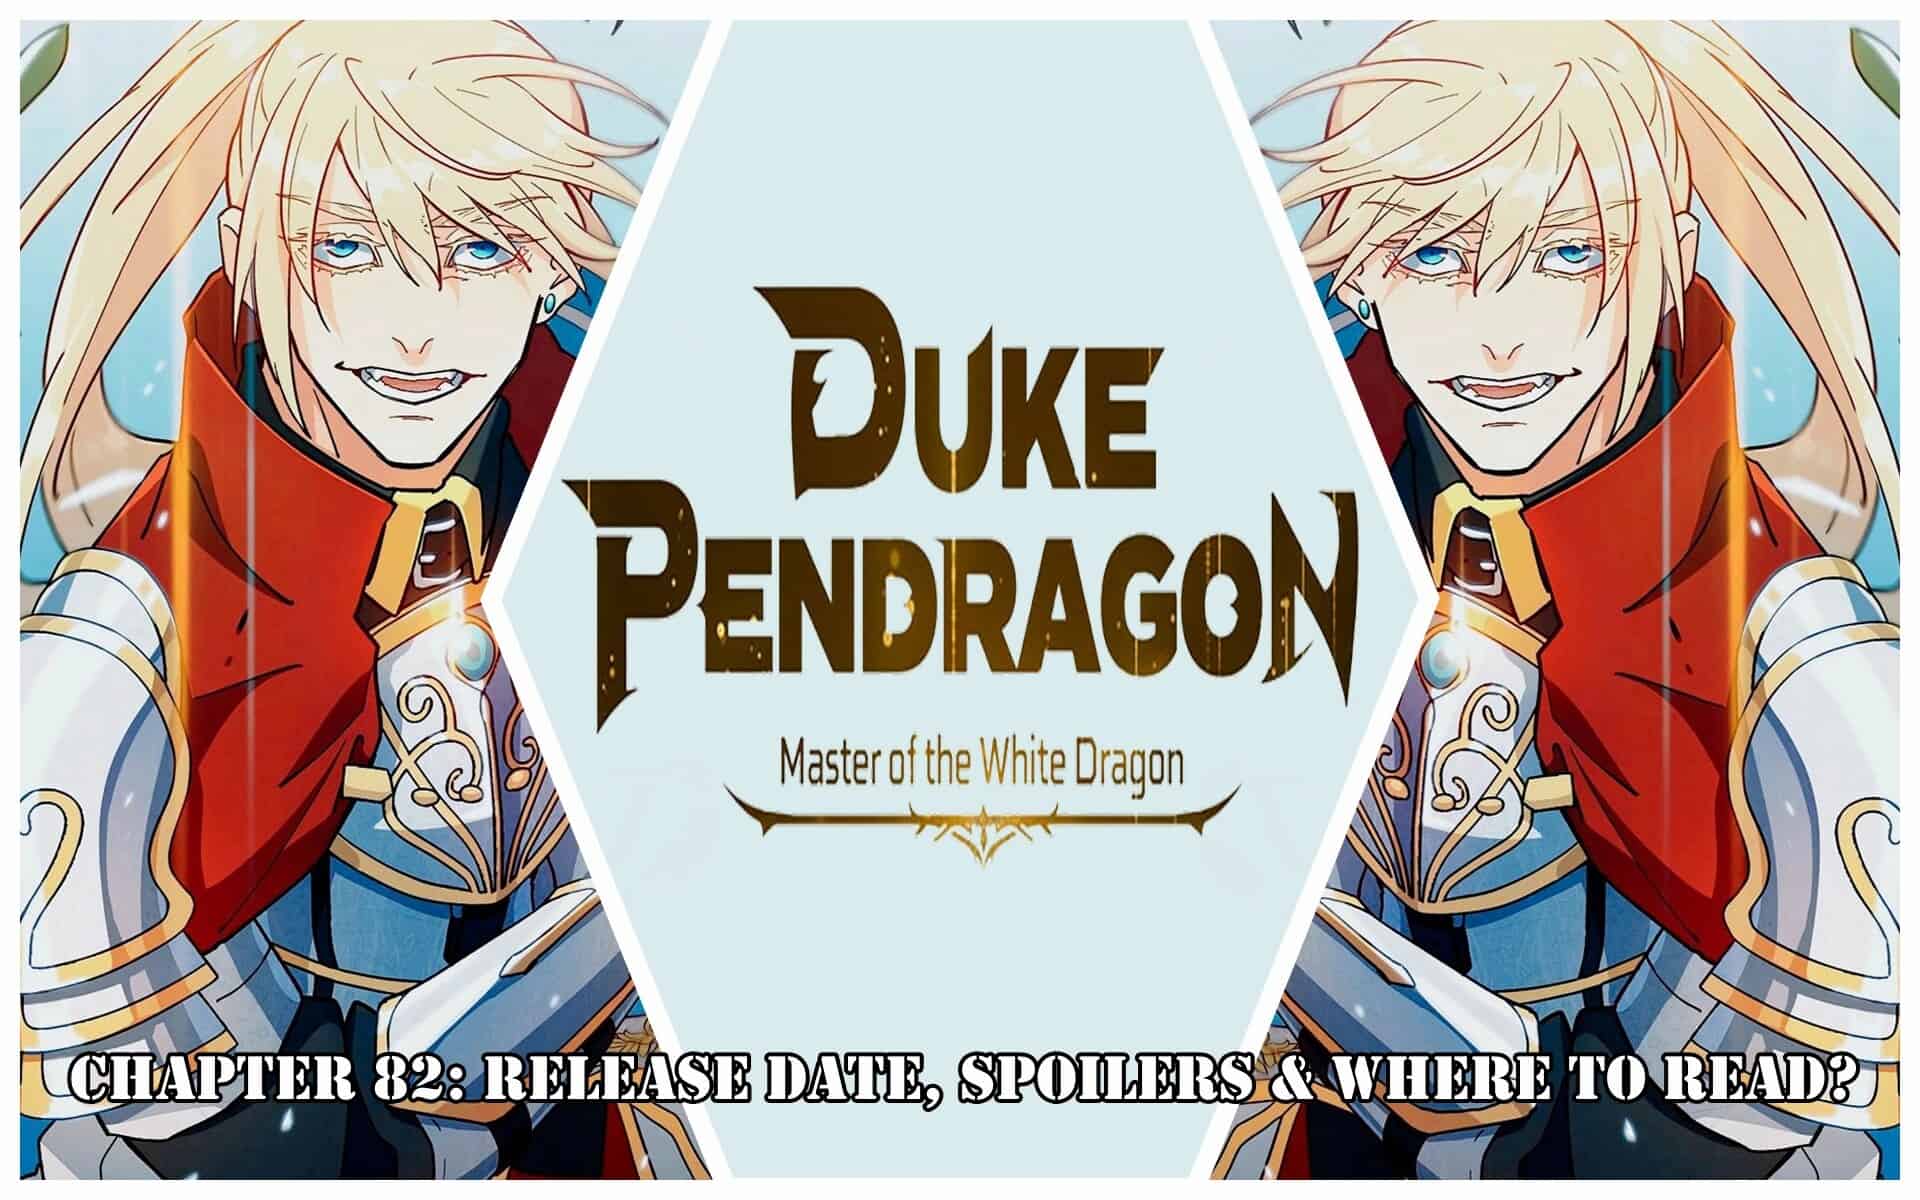 Duke Pendragon chapter 51 release date em 2023